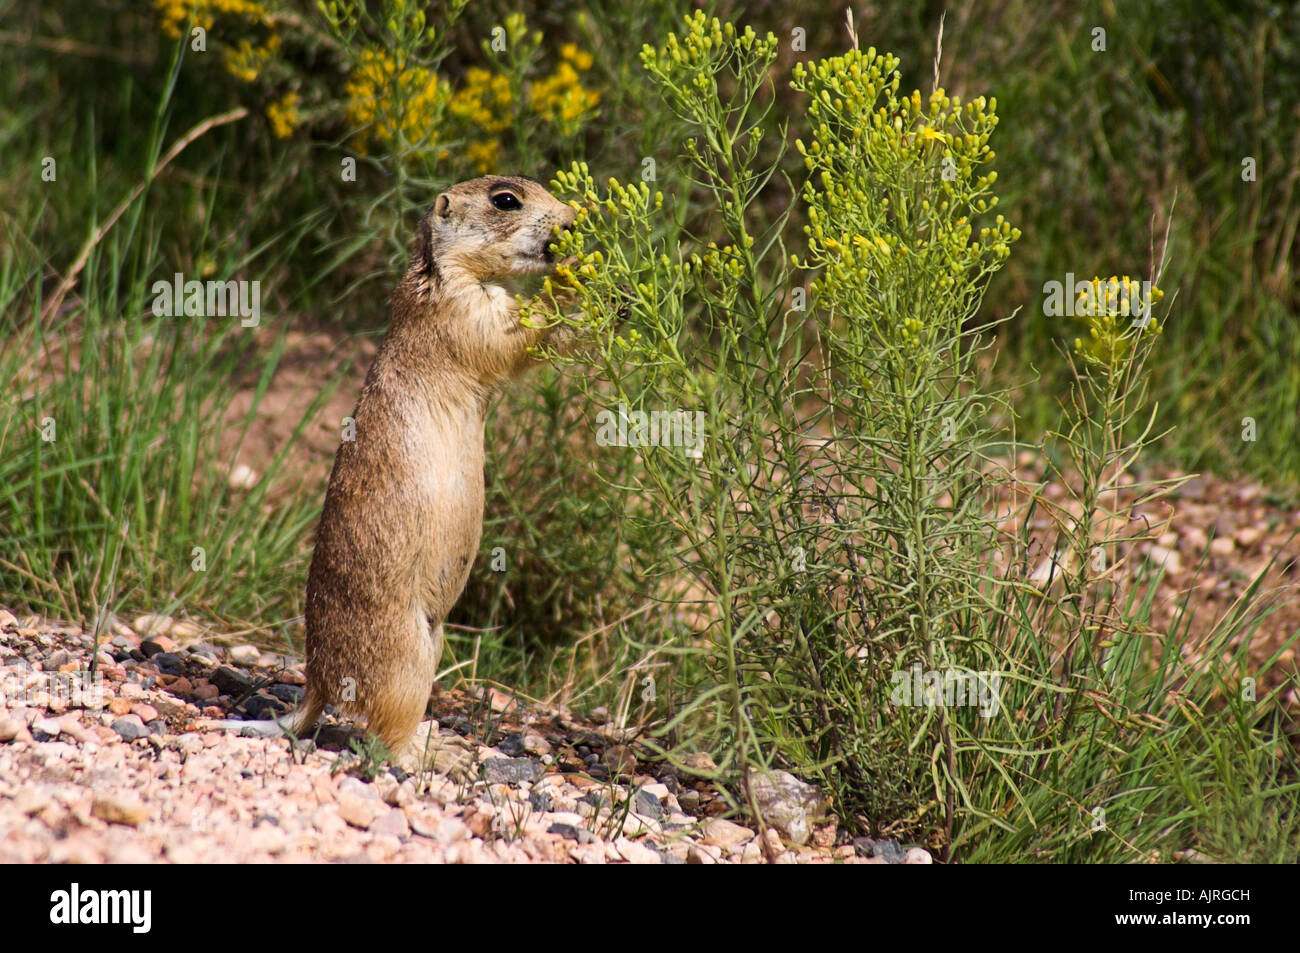 Endangered Utah prairie dog Cynomys parvidens standing Stock Photo